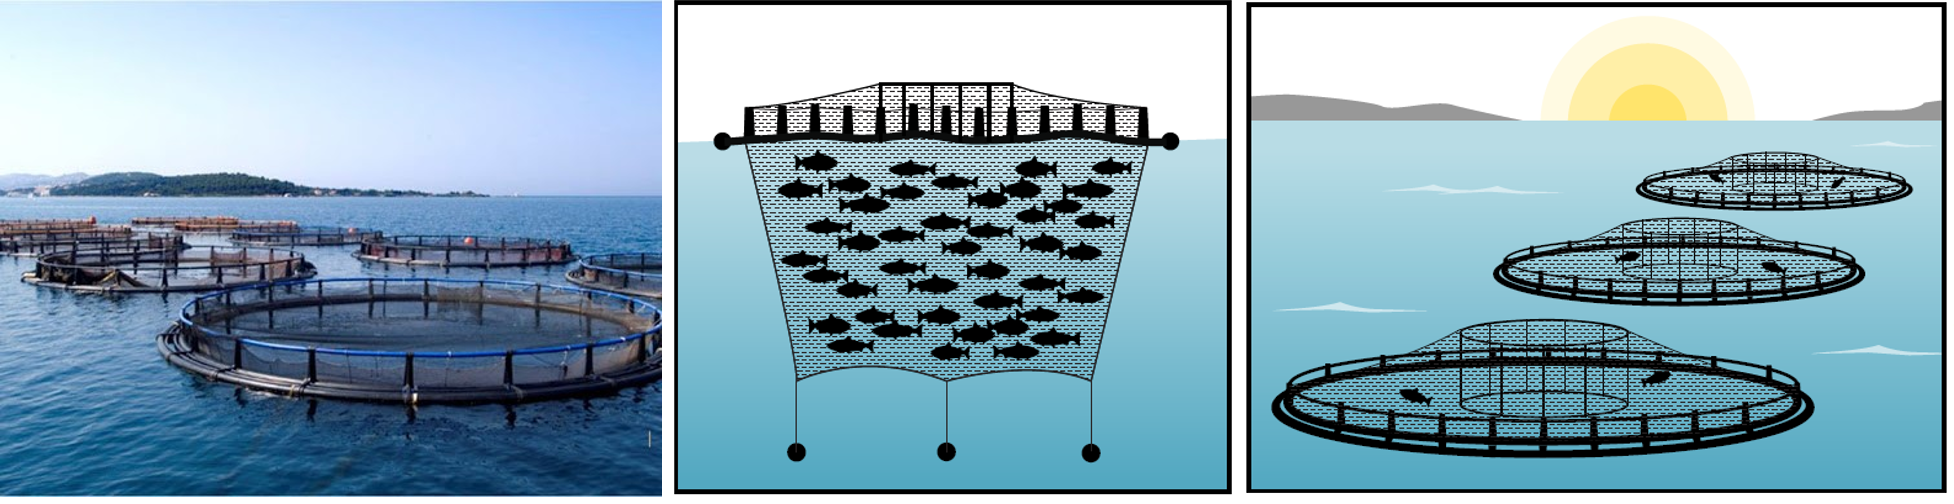 farming methods salmon cages